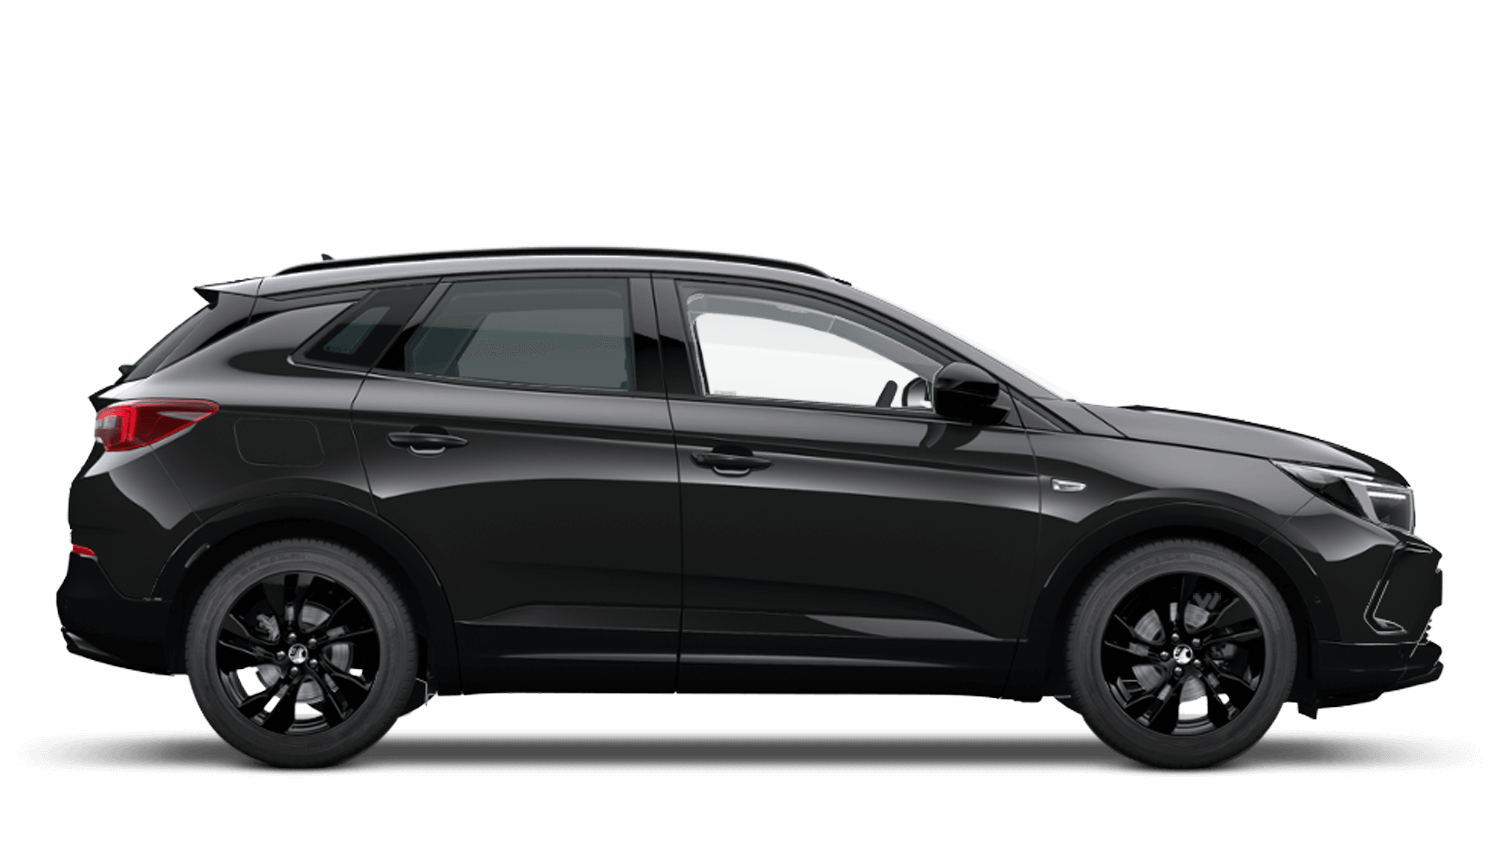 Diamond Black (Metallic) New Vauxhall Grandland Hybrid